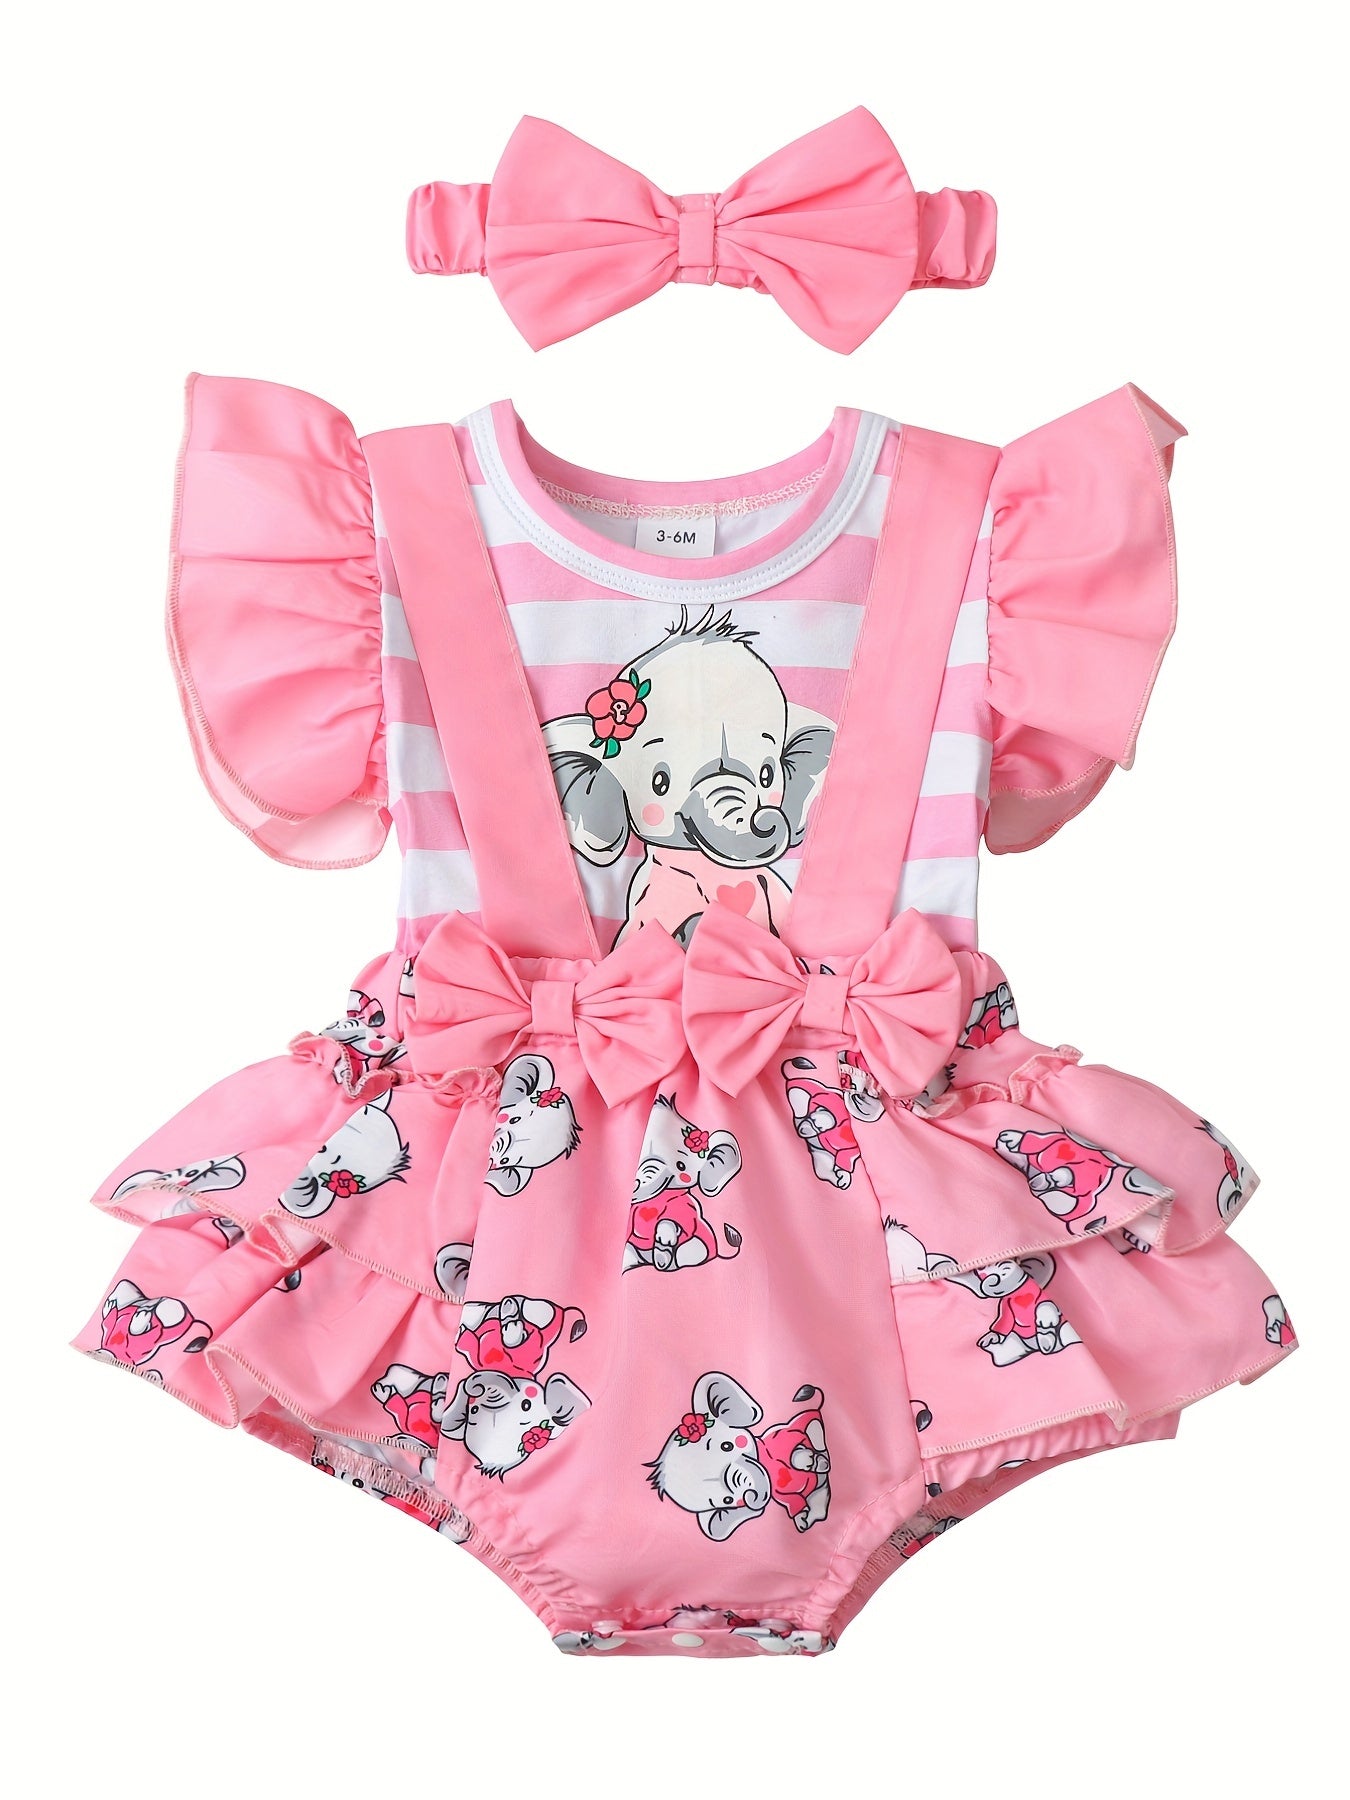 2pcs Baby Girls Cute Elephant Fly Sleeve Onesie & Headband Set Clothes